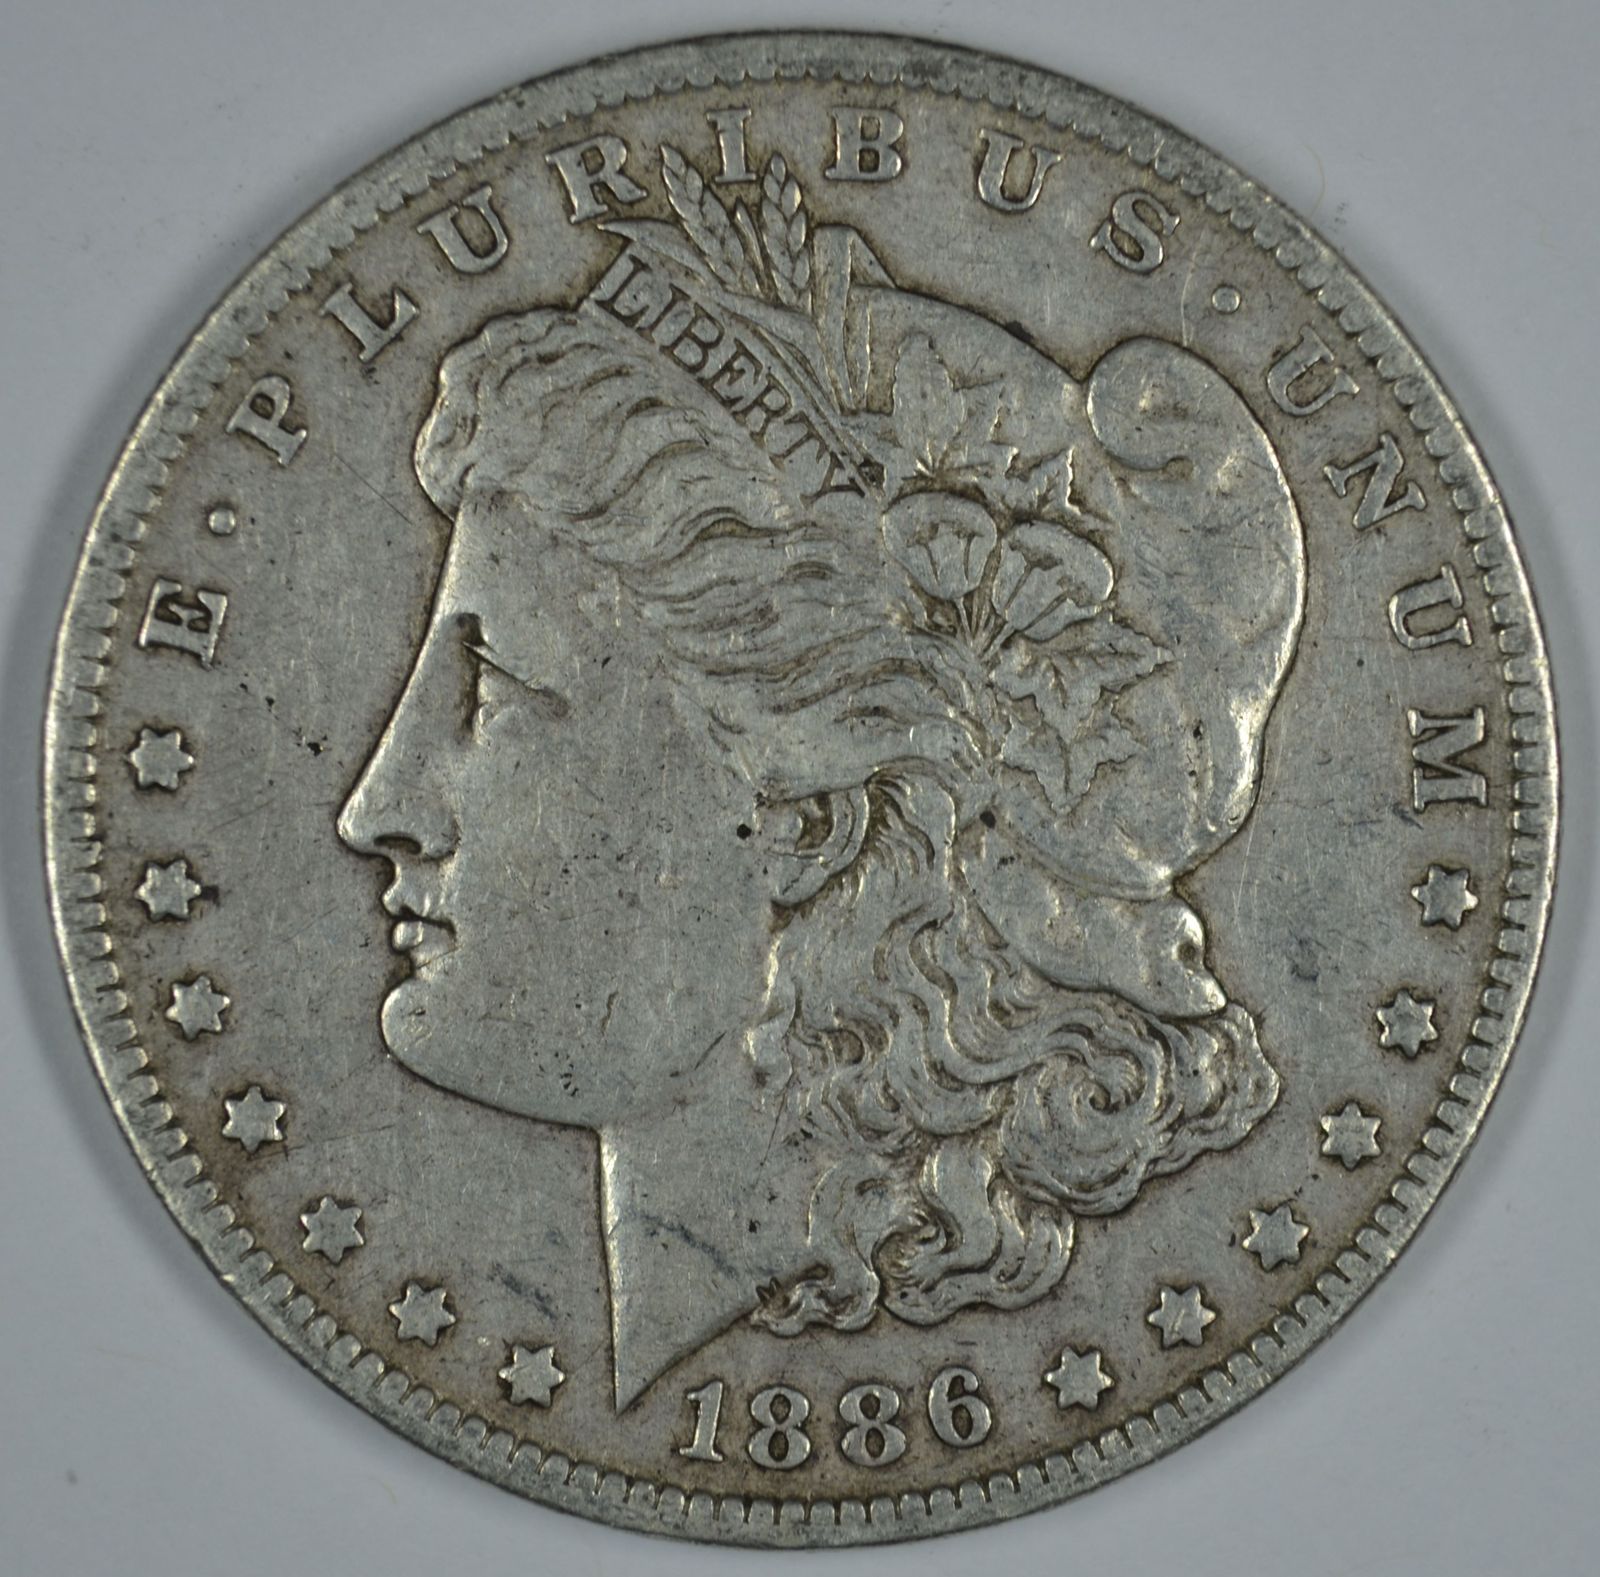 1886 O Morgan circulated silver dollar F details - $50.00